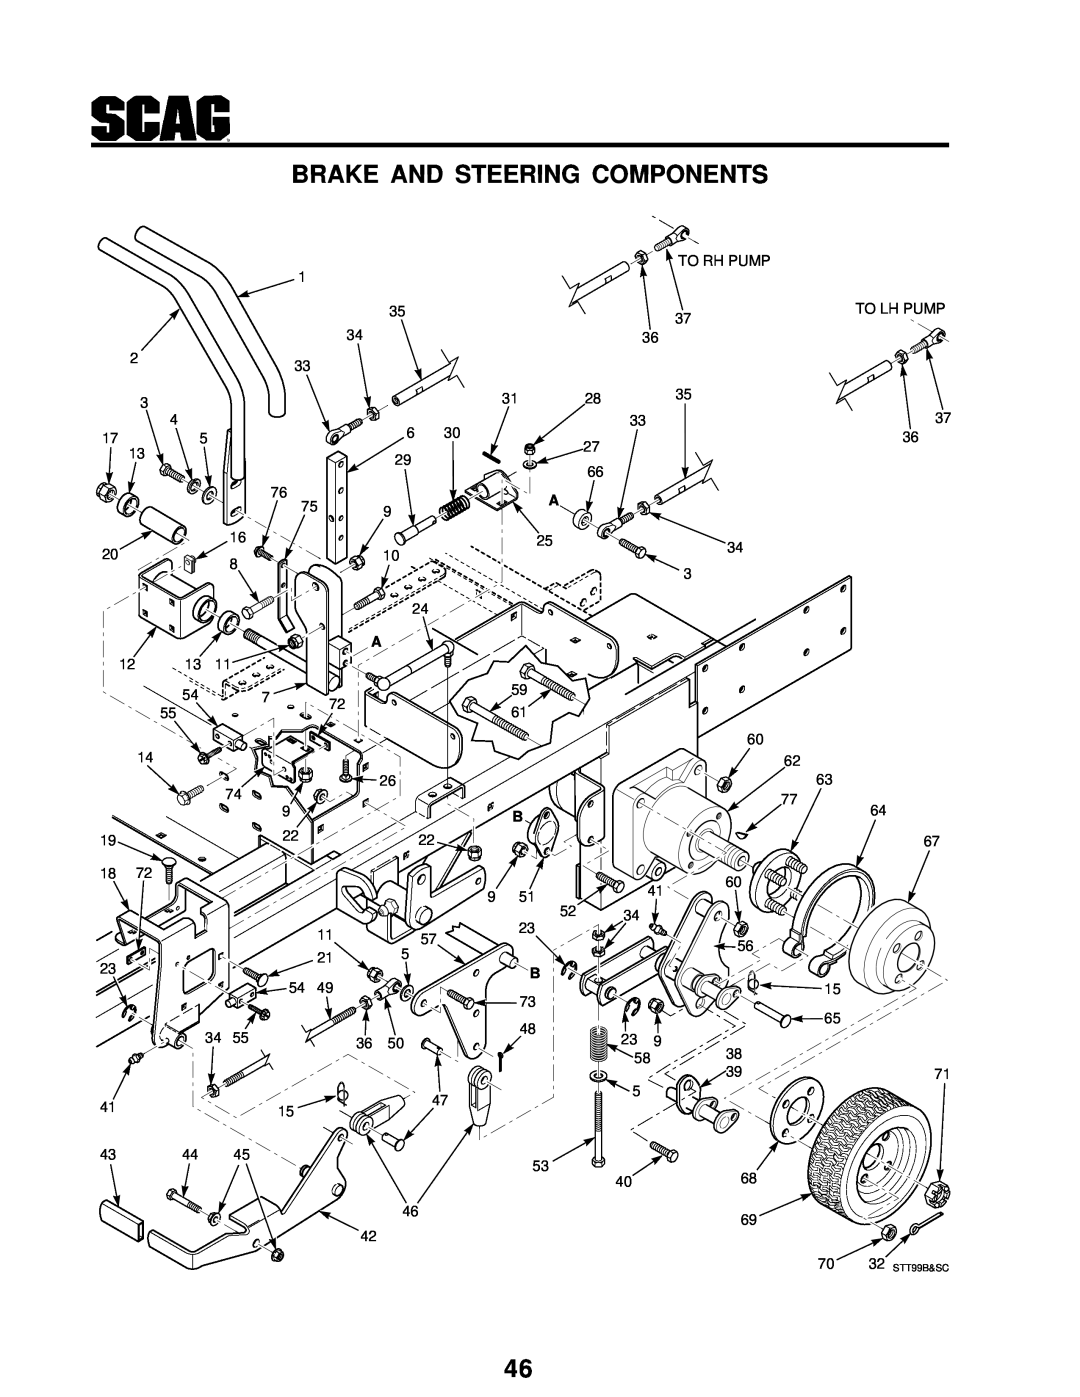 Scag Power Equipment STT-31BSG manual Brake And Steering Components, To Rh Pump, To Lh Pump, 32 STT99B&SC 